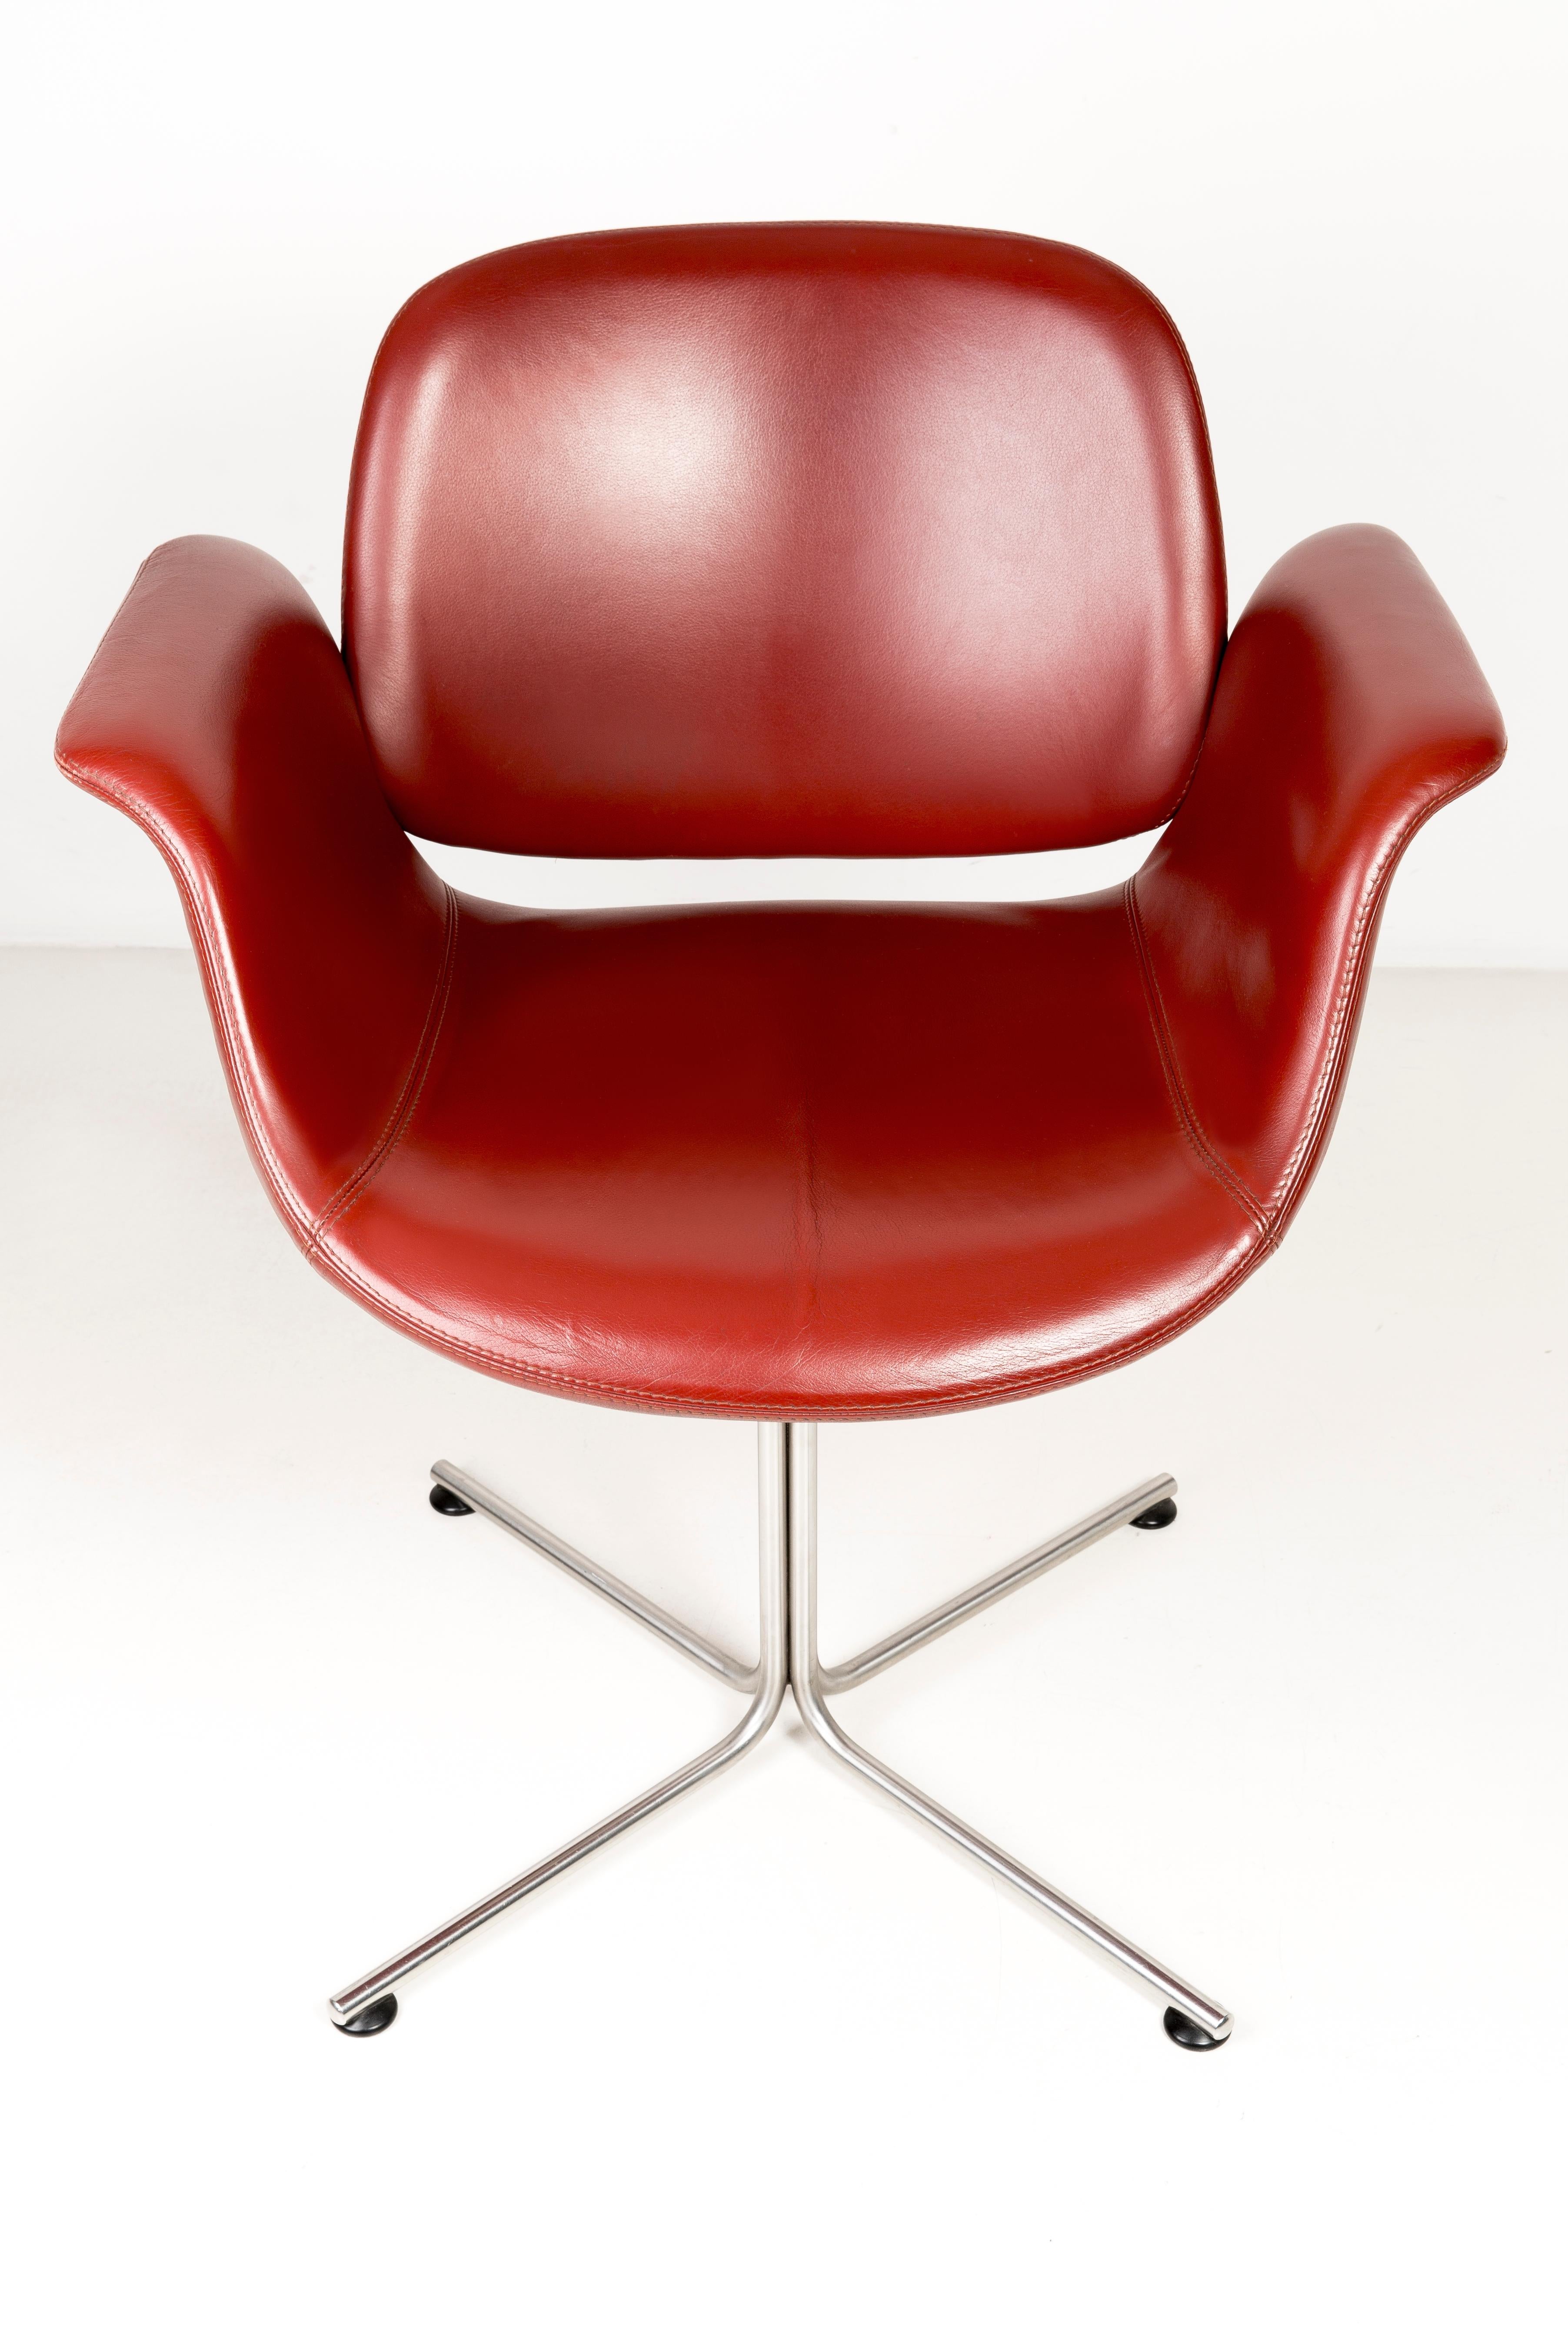 Contemporary Unique Flamingo Chair, Red Leather, Erik Jørgensen, 2000s, Denmark